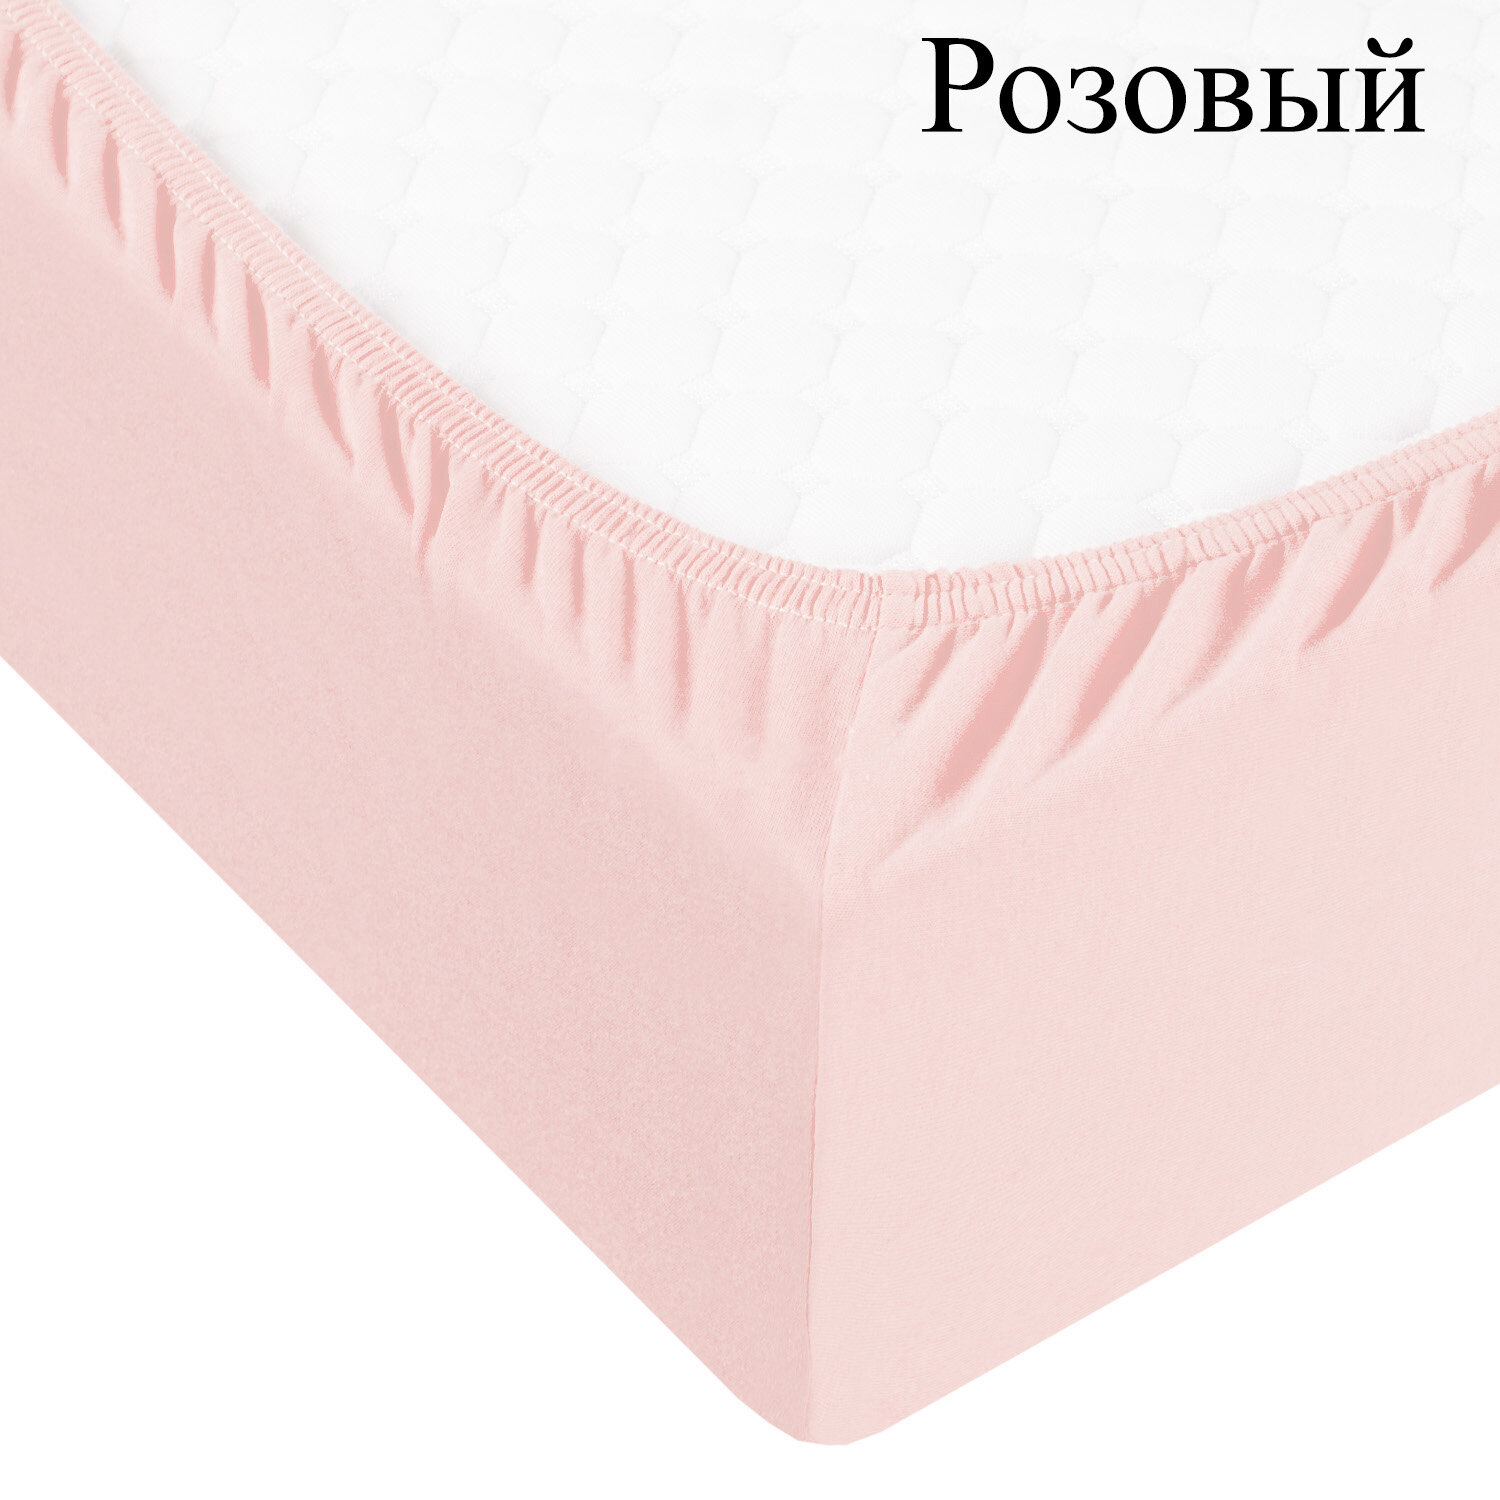 Простыня на резинке Boaz Цвет: Розовый (90х200), размер 90х200 adl542389 Простыня на резинке Boaz Цвет: Розовый (90х200) - фото 1